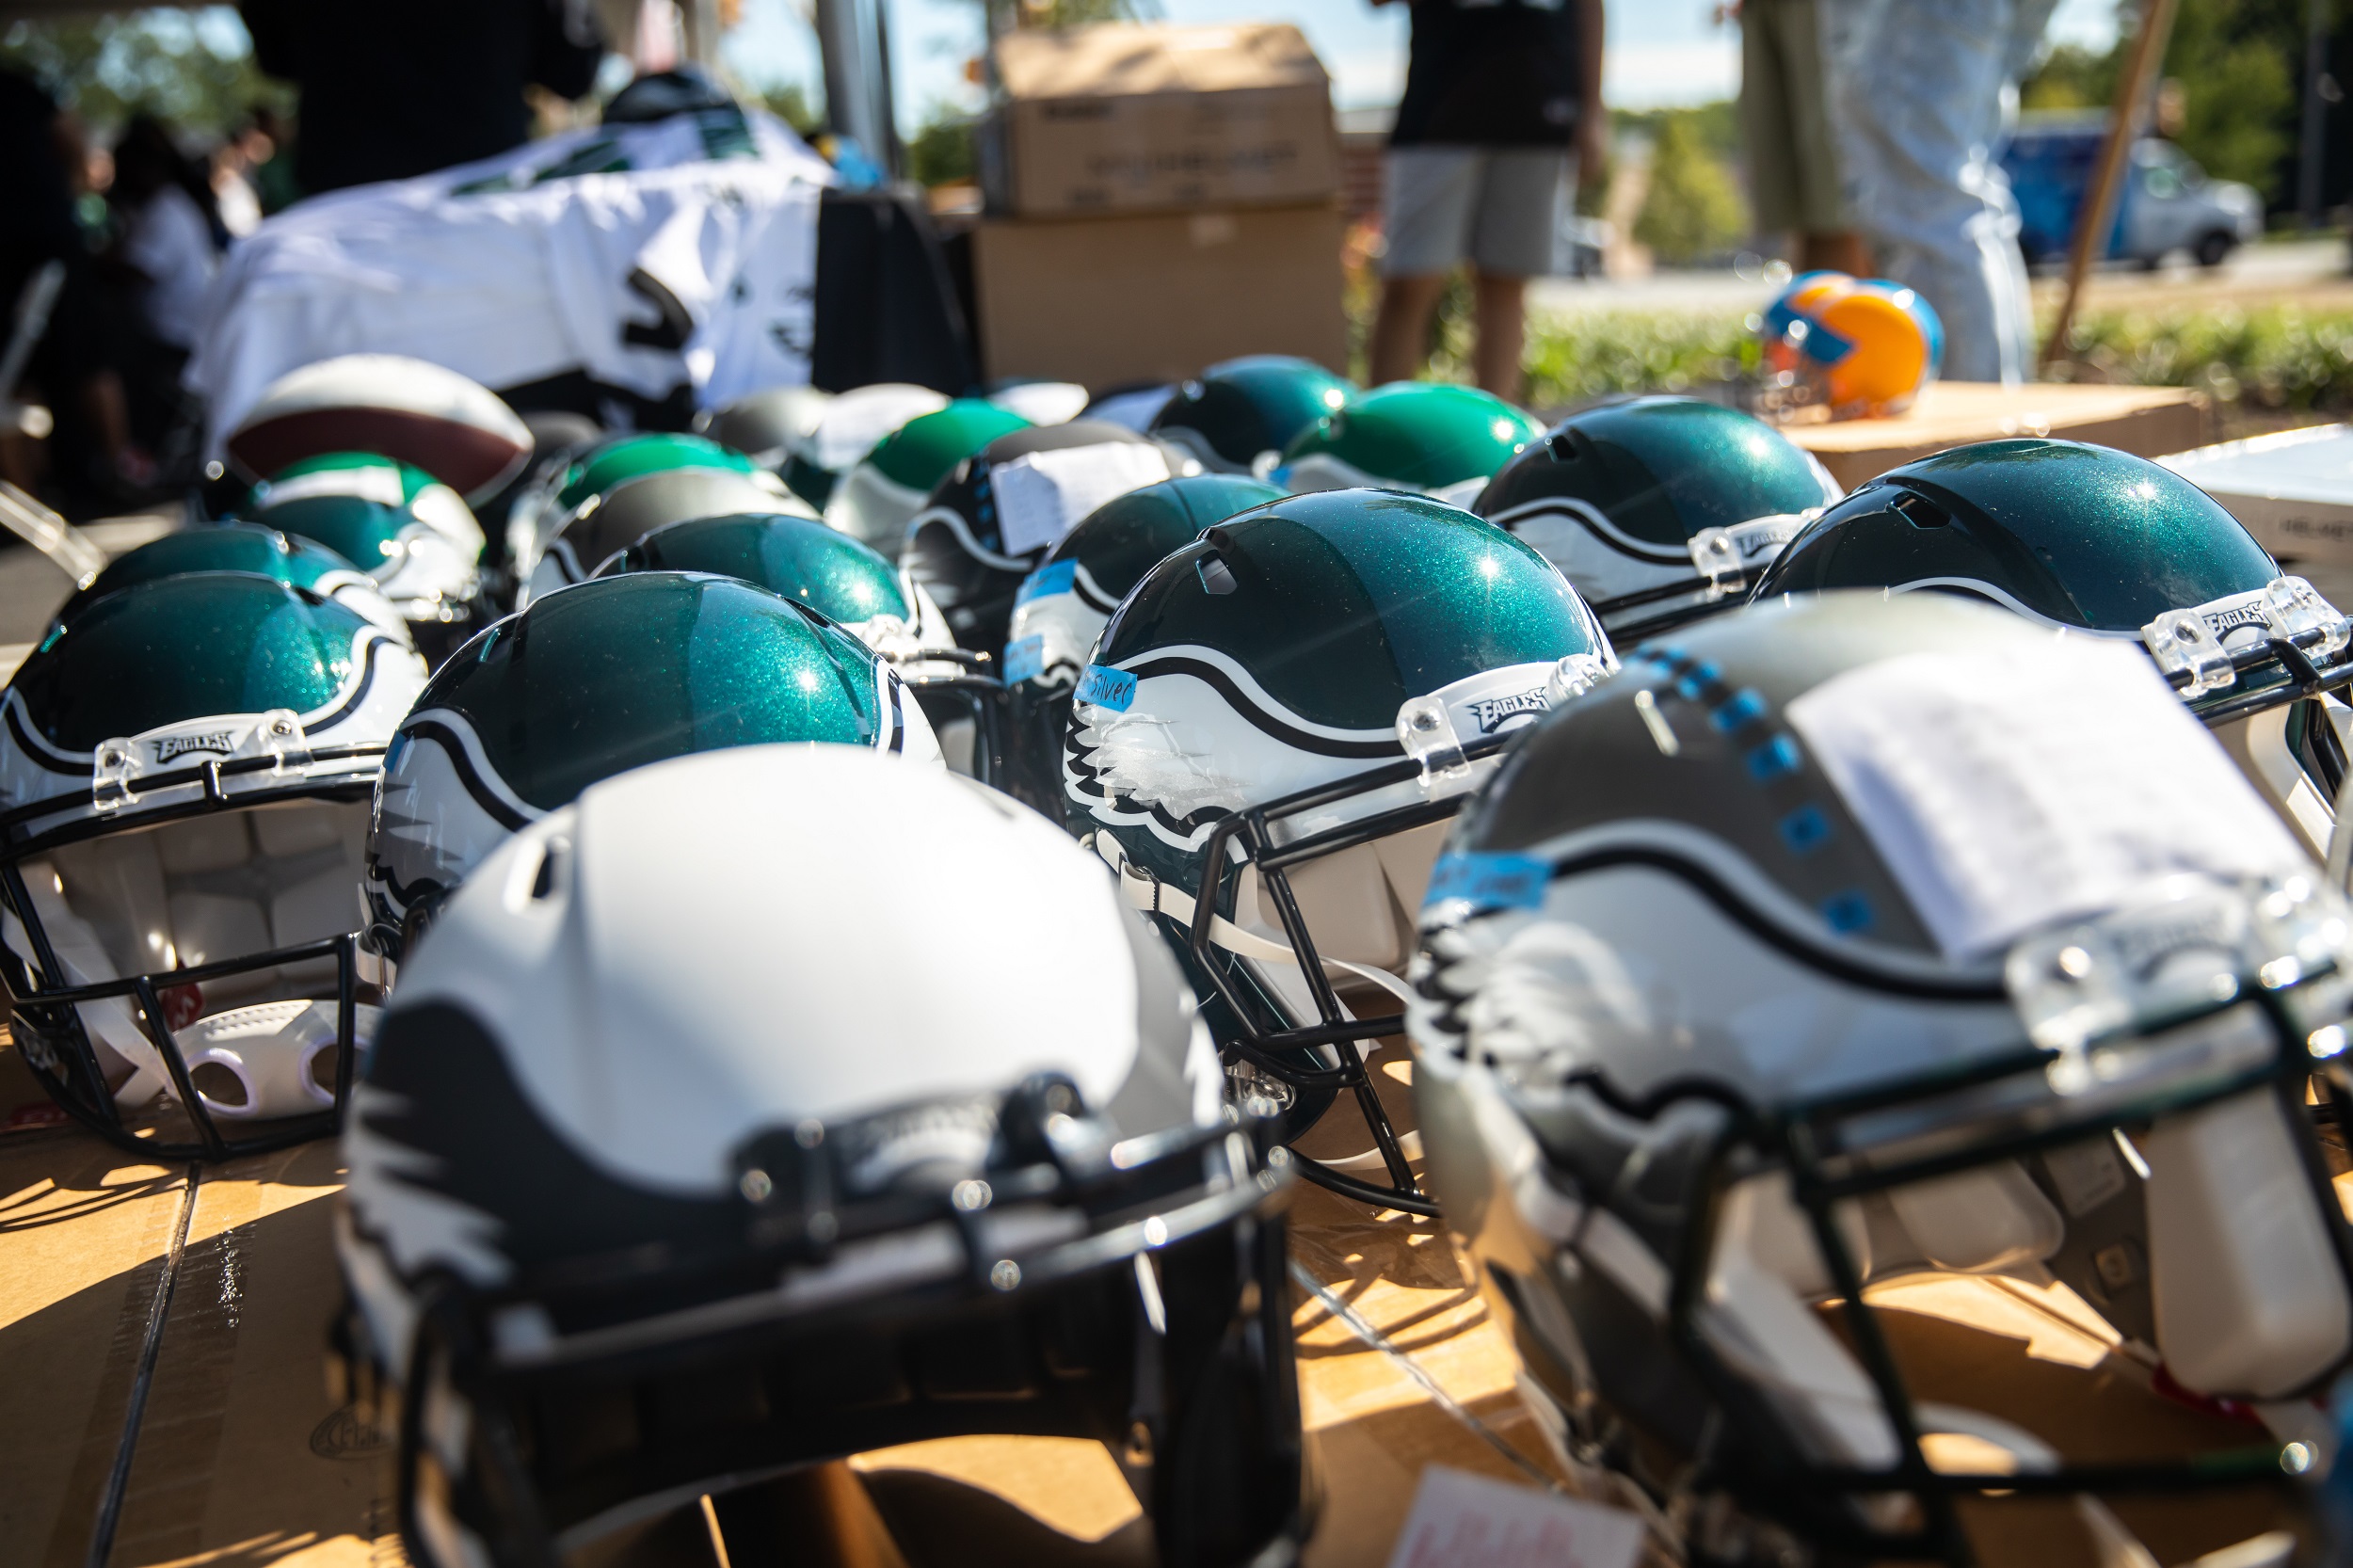 Eagles helmet lined up on table